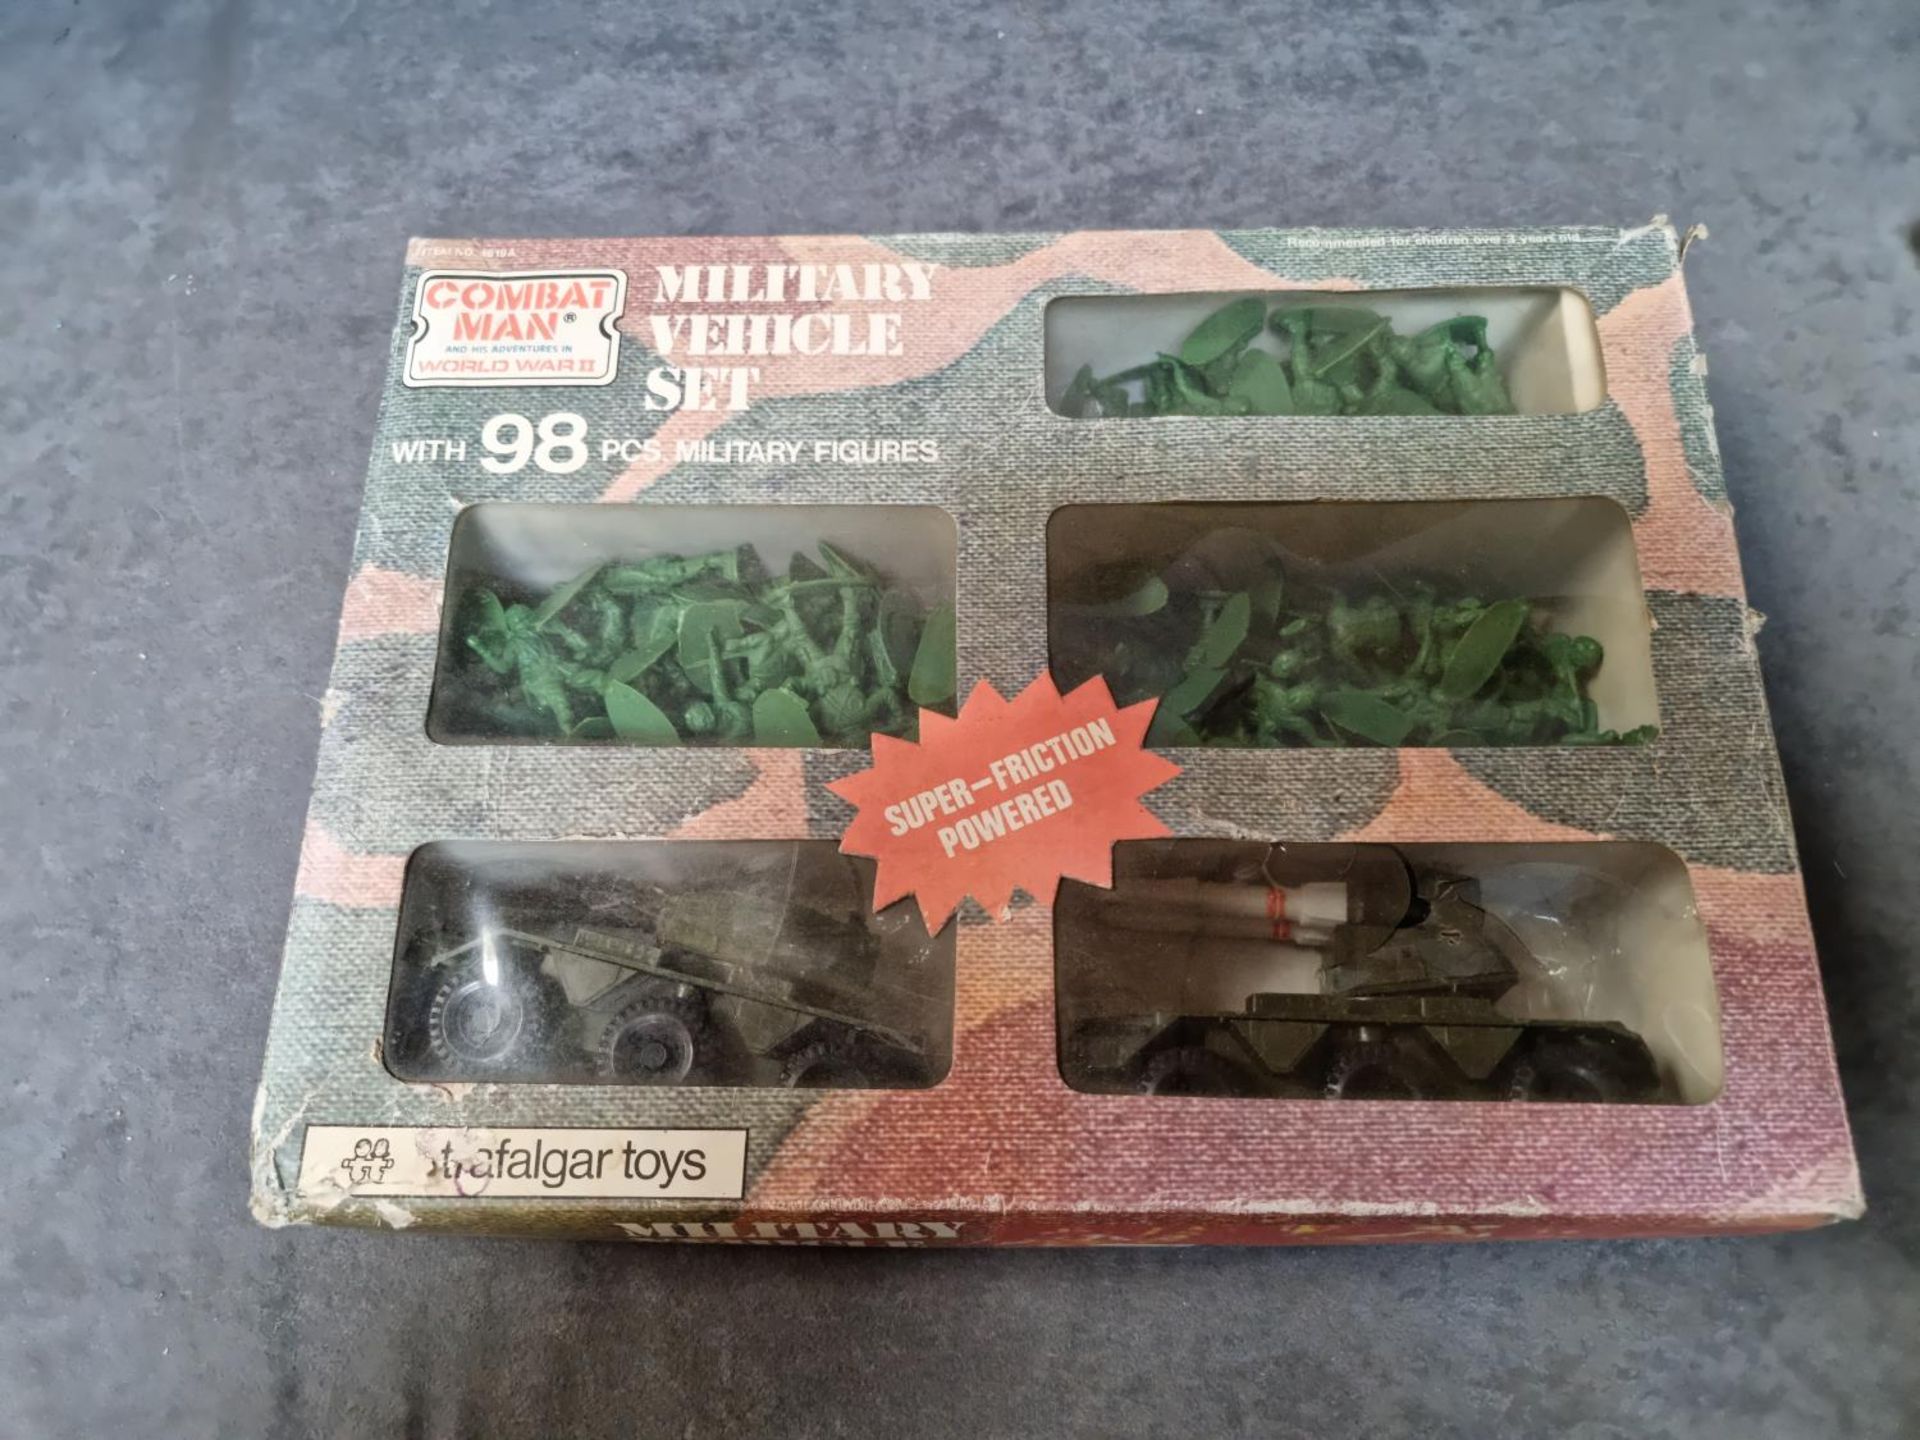 Trafalgar Toys #4619a Military Vehicle Set With 98 Piece Military Figures - Bild 2 aus 3